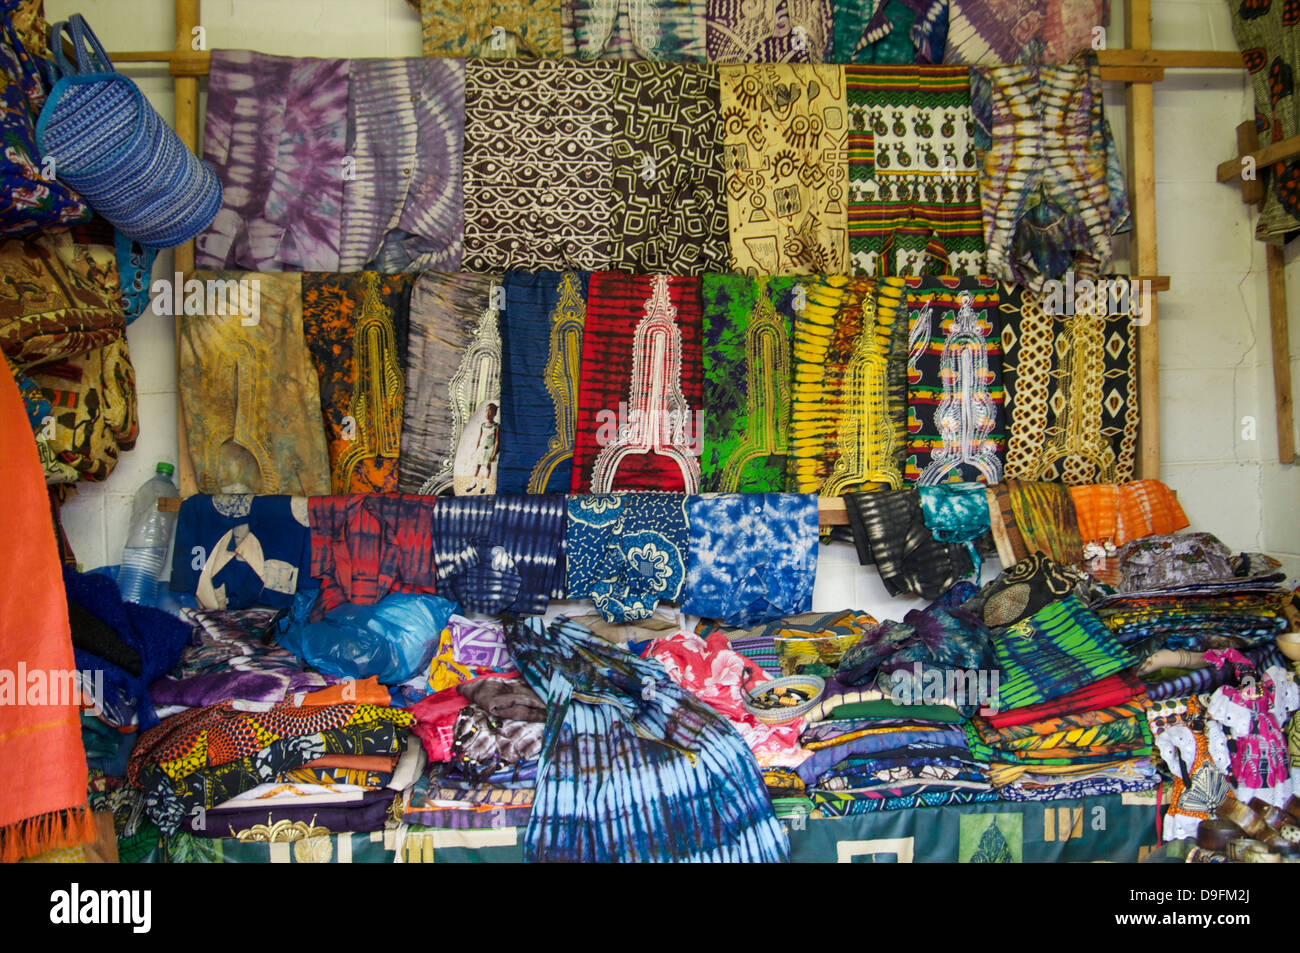 Royal Albert Markt, Banjul, Gambia, Westafrika, Afrika Stockfoto